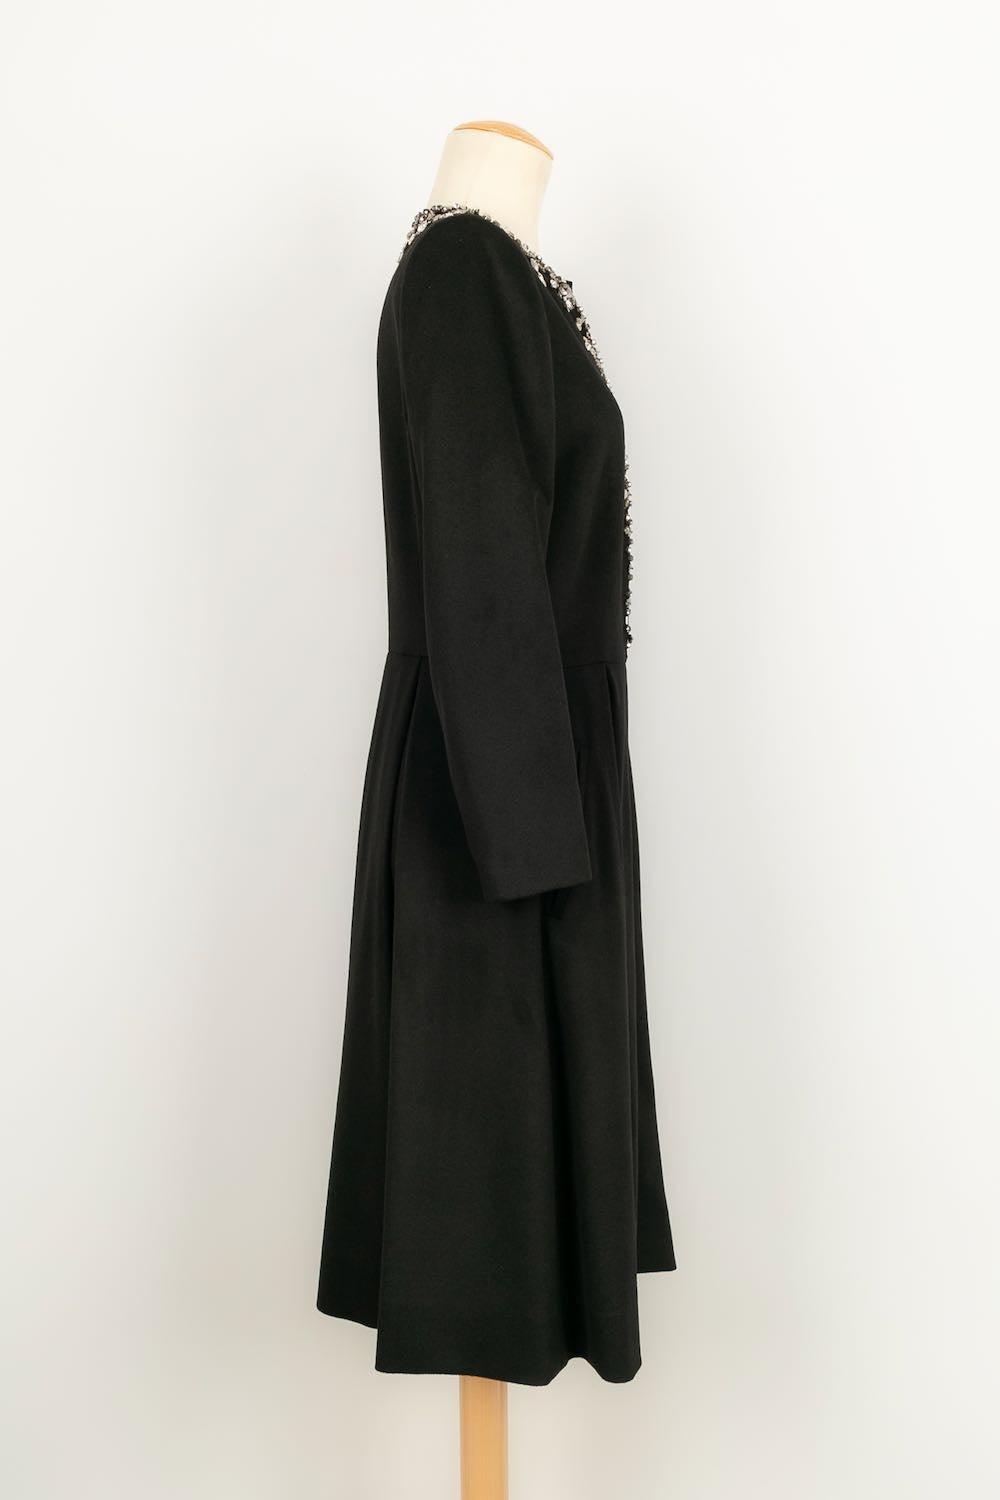 Azzaro - (Made in France) Black cashmere coat / long jacket sewn with rhinestones. Size 40FR.

Additional information: 
Dimensions: Shoulder width: 37 cm, Sleeve length: 54 cm, Length: 100 cm
Condition: Very good condition
Seller Ref number: VR197